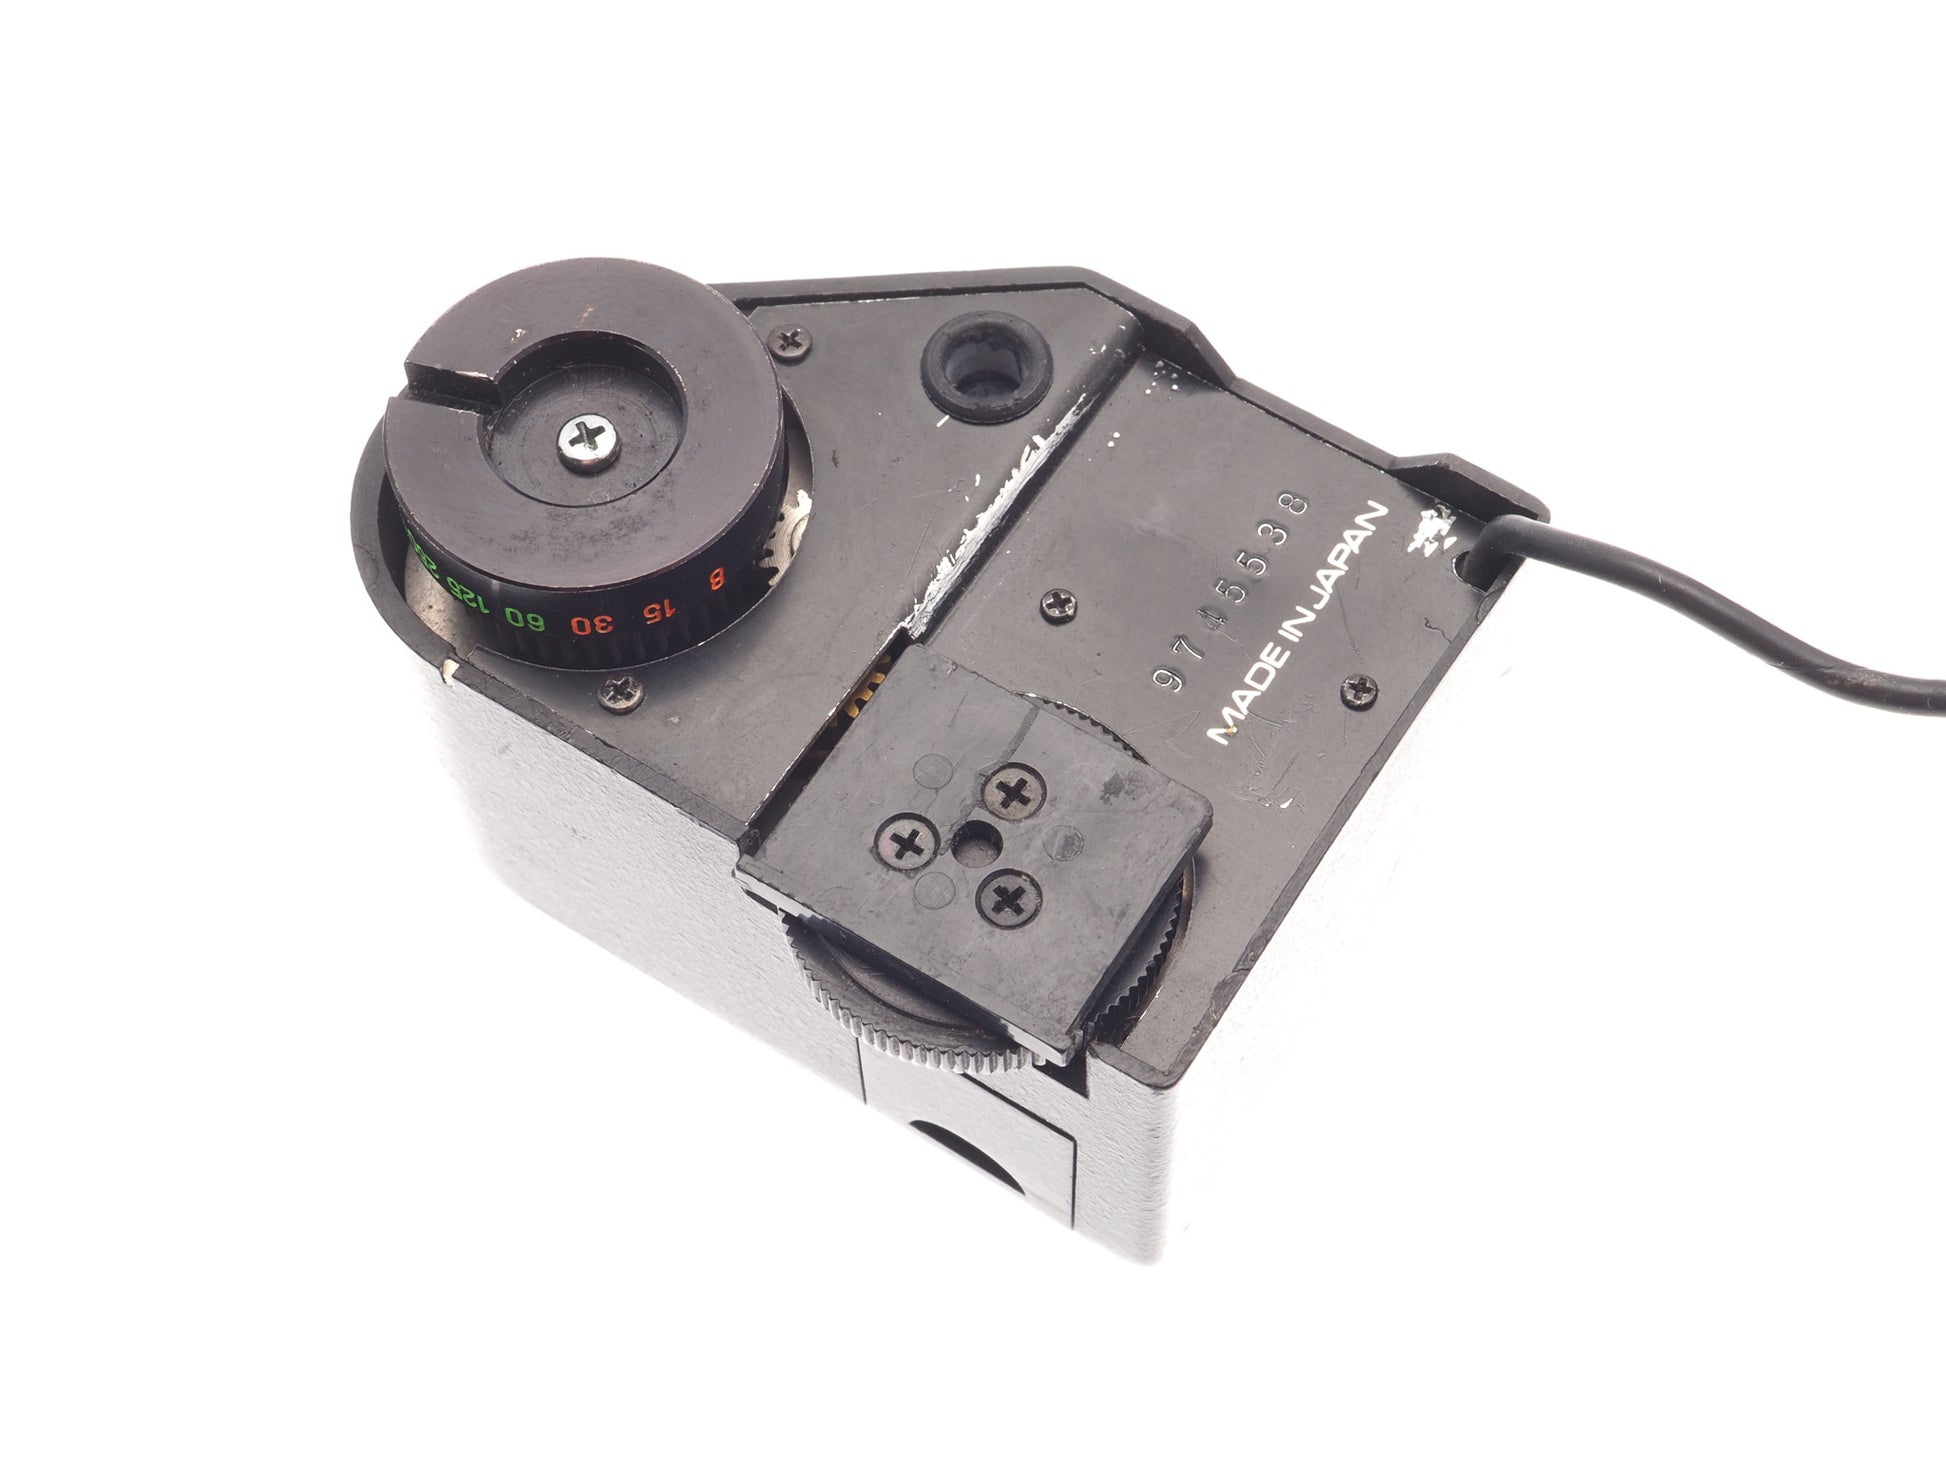 Cosina AEC Adapter - Accessory – Kamerastore